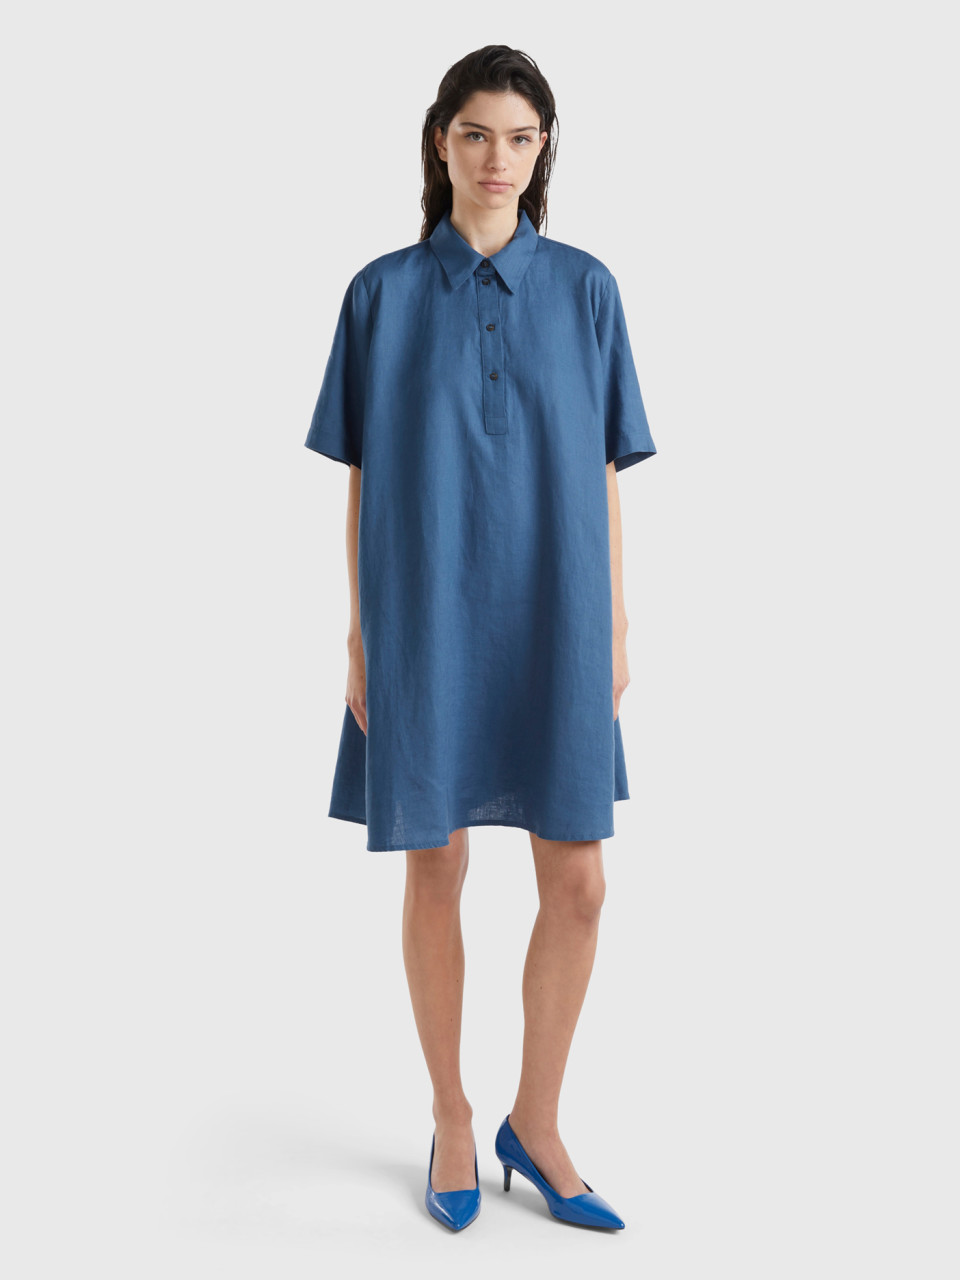 Benetton, Cropped Dress In Pure Linen, Air Force Blue, Women